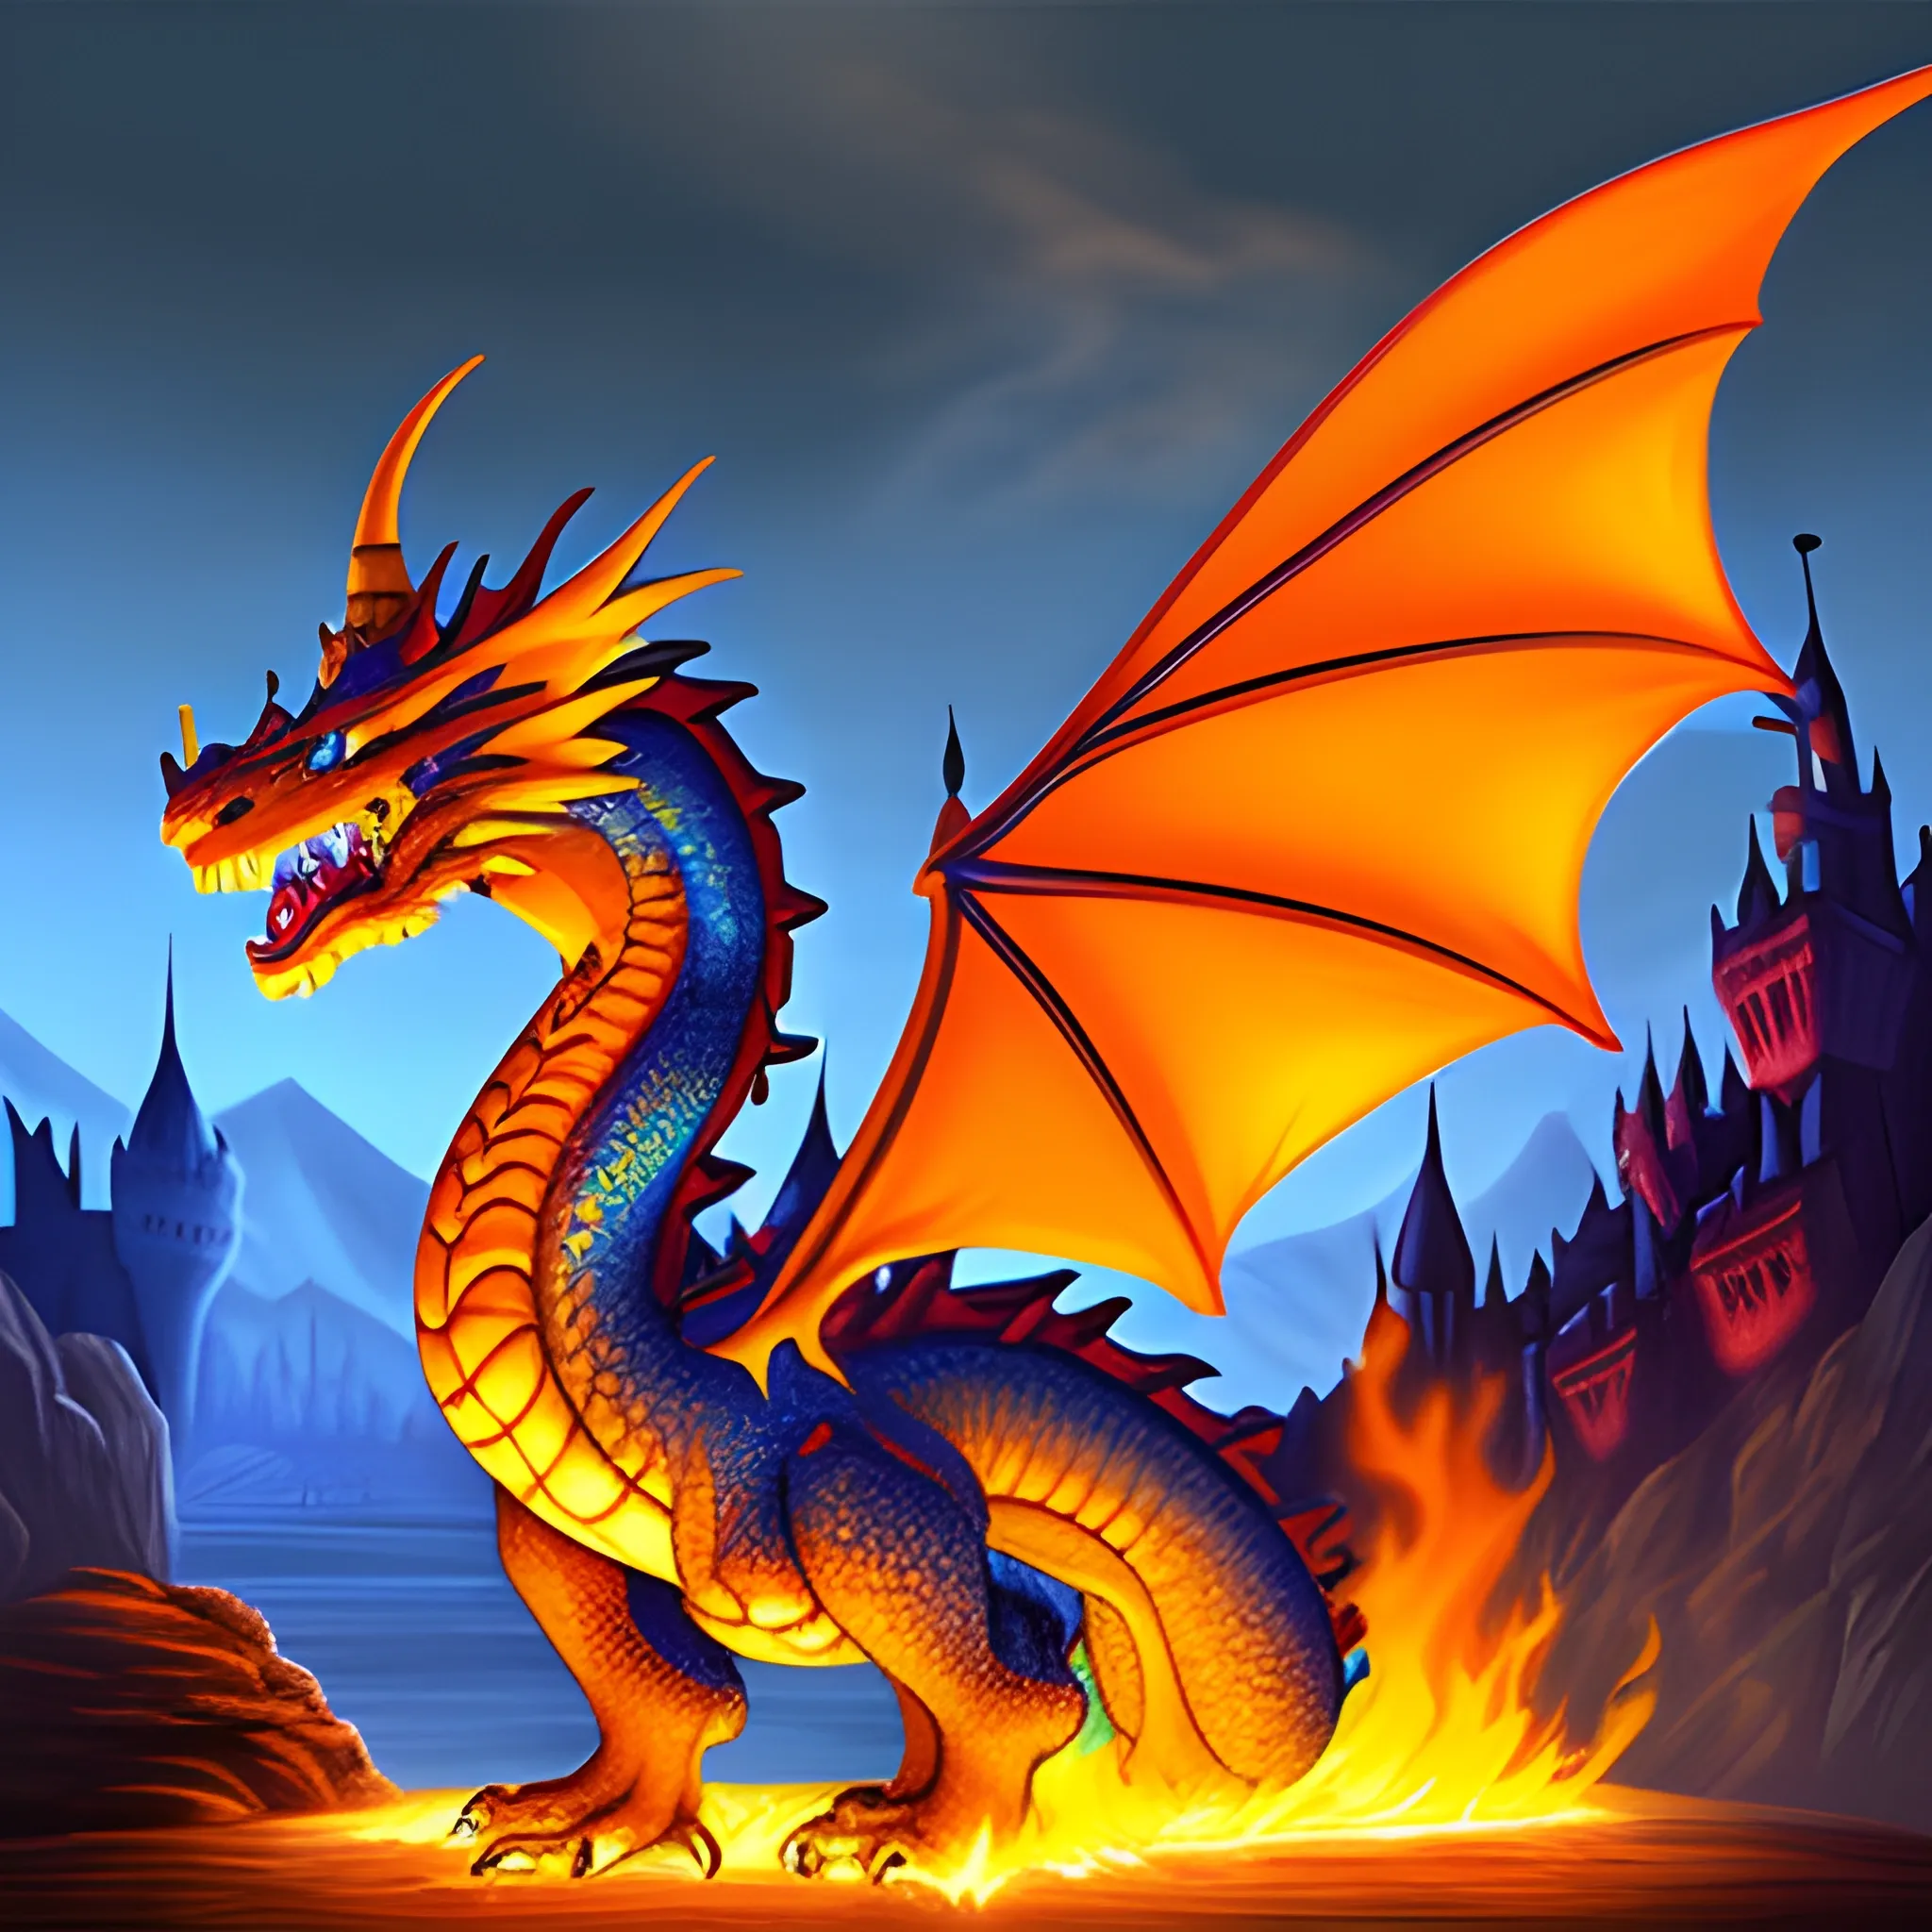 castle dragon fire breathe
, Cartoon